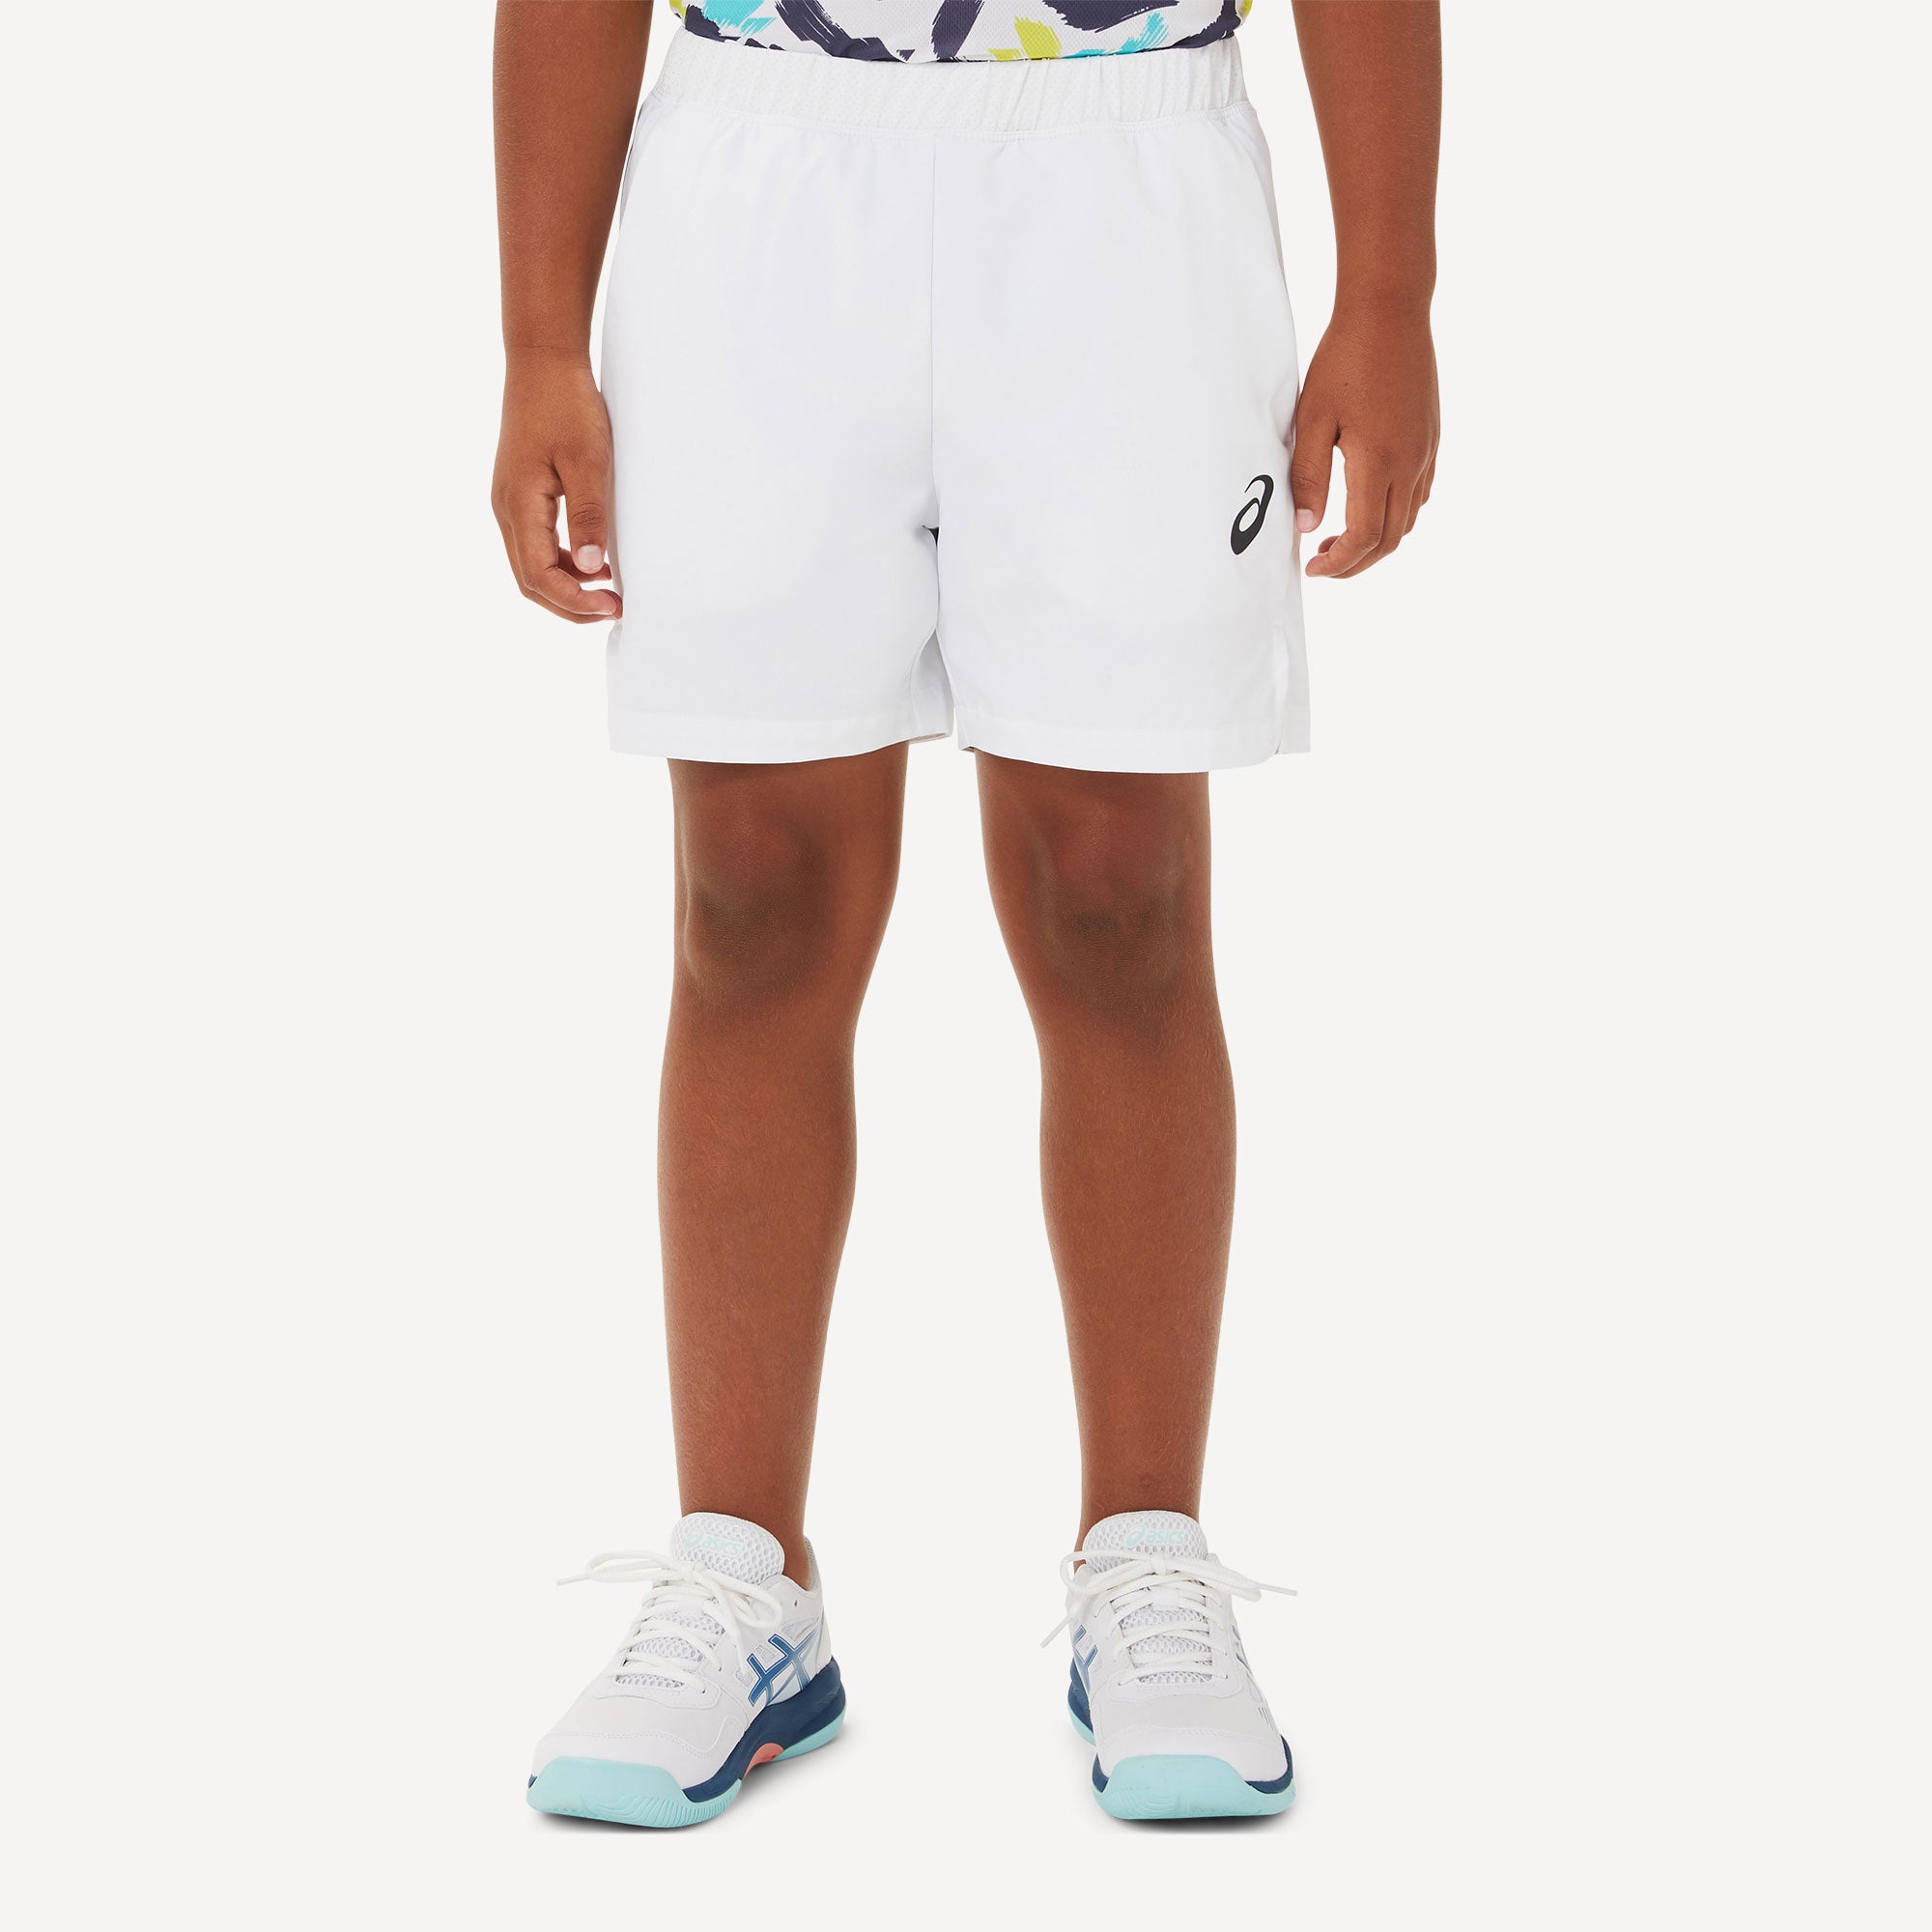 ASICS Boys' Tennis Shorts White (1)